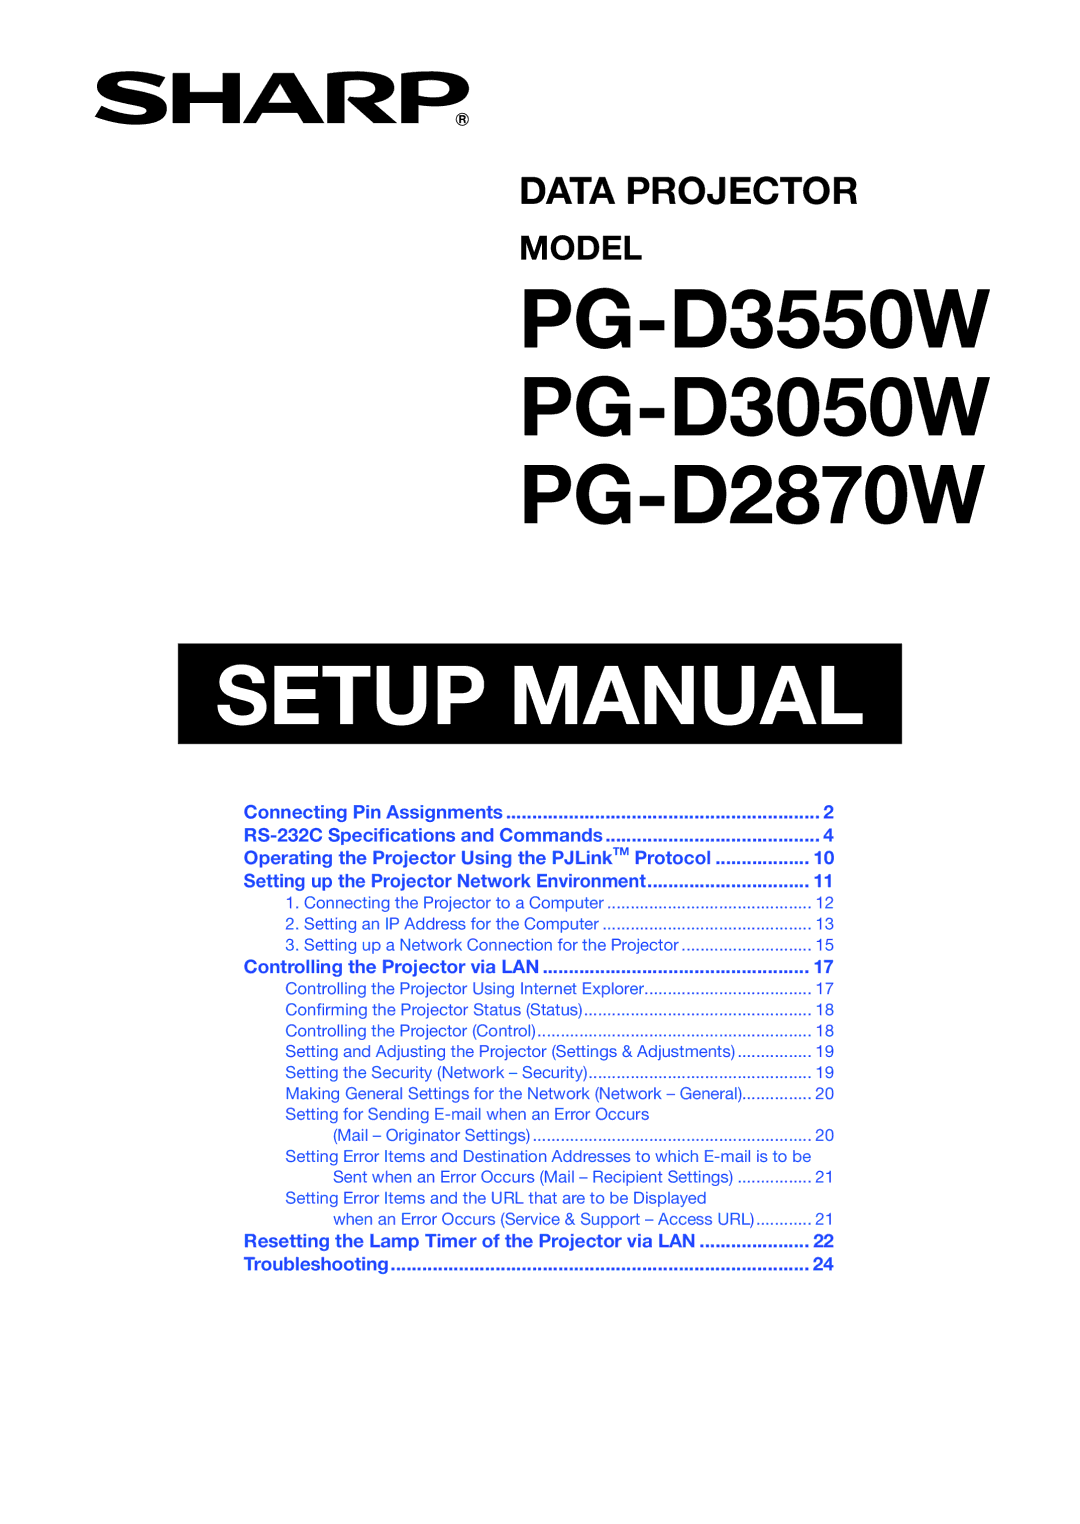 Sharp PG-D3050W, PG-D2870W, PG-D3550W specifications Setup Manual 